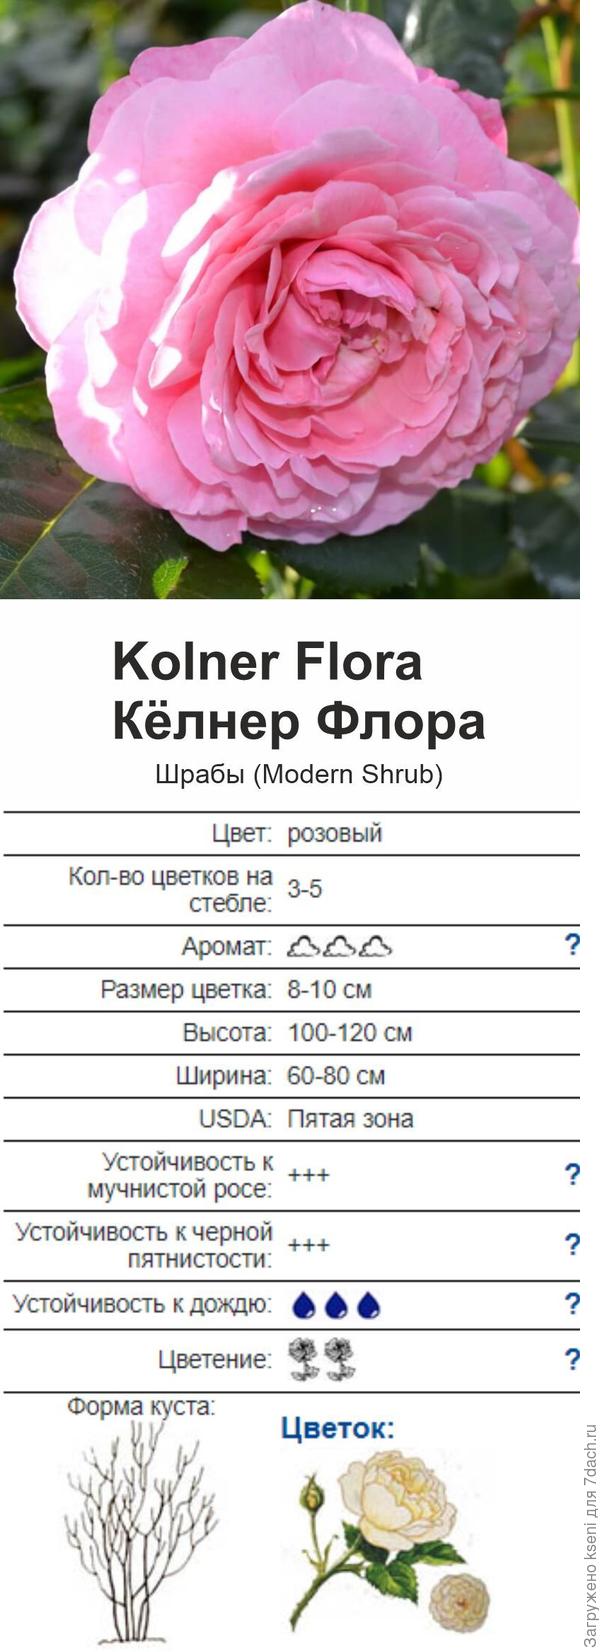 Kolner Flora